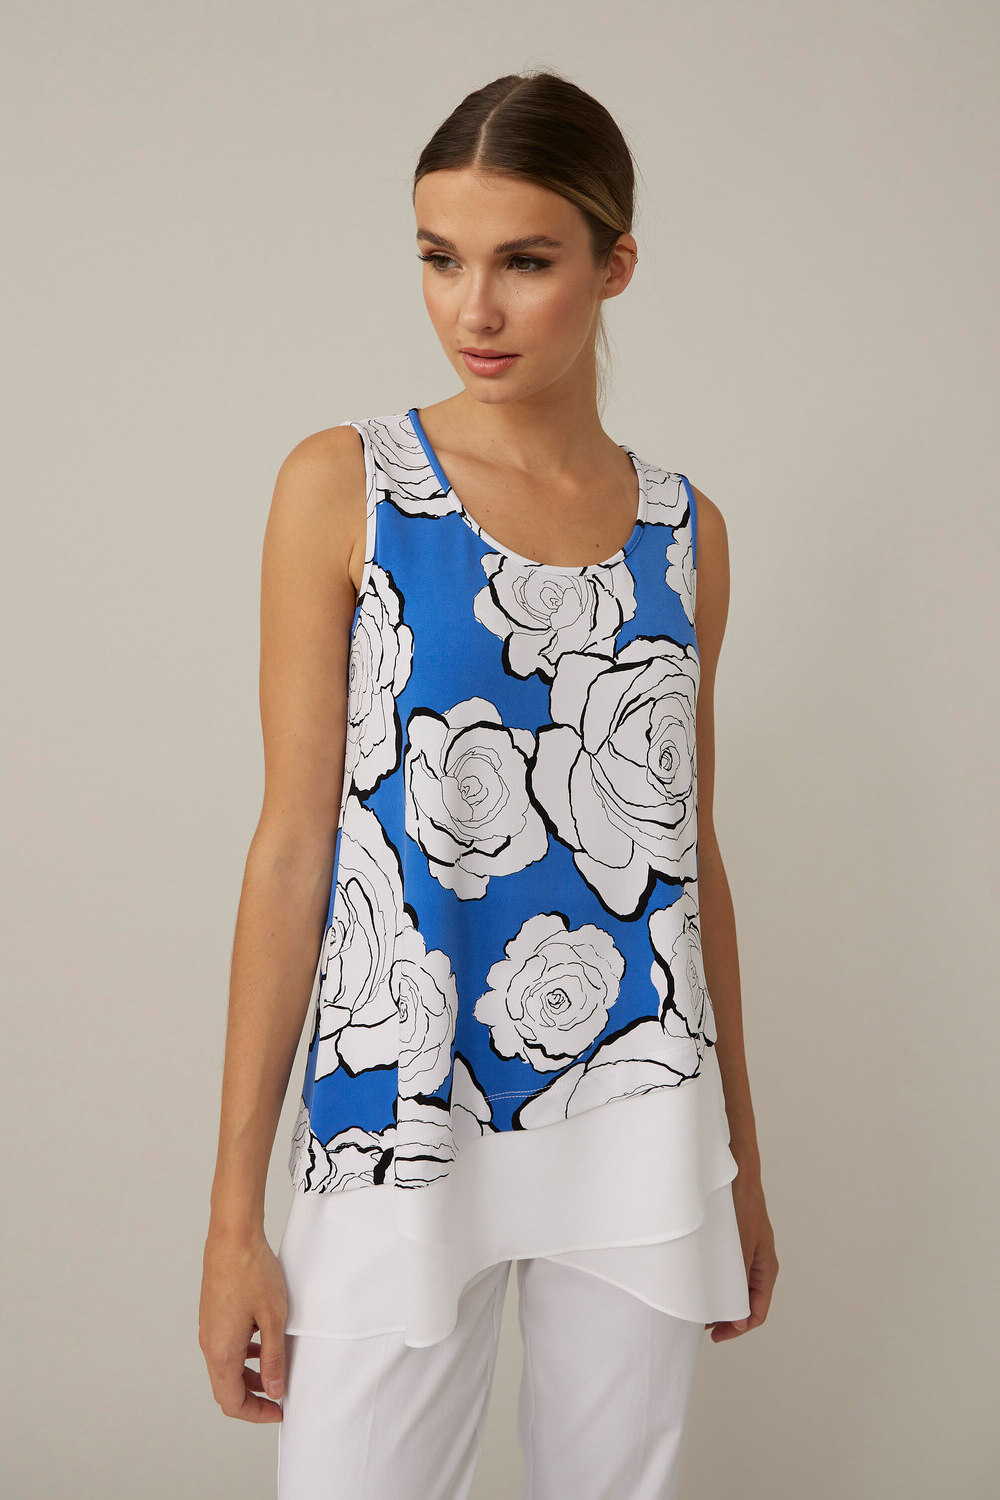 Joseph Ribkoff Floral Sleeveless Top Style 221381. Blue/vanilla